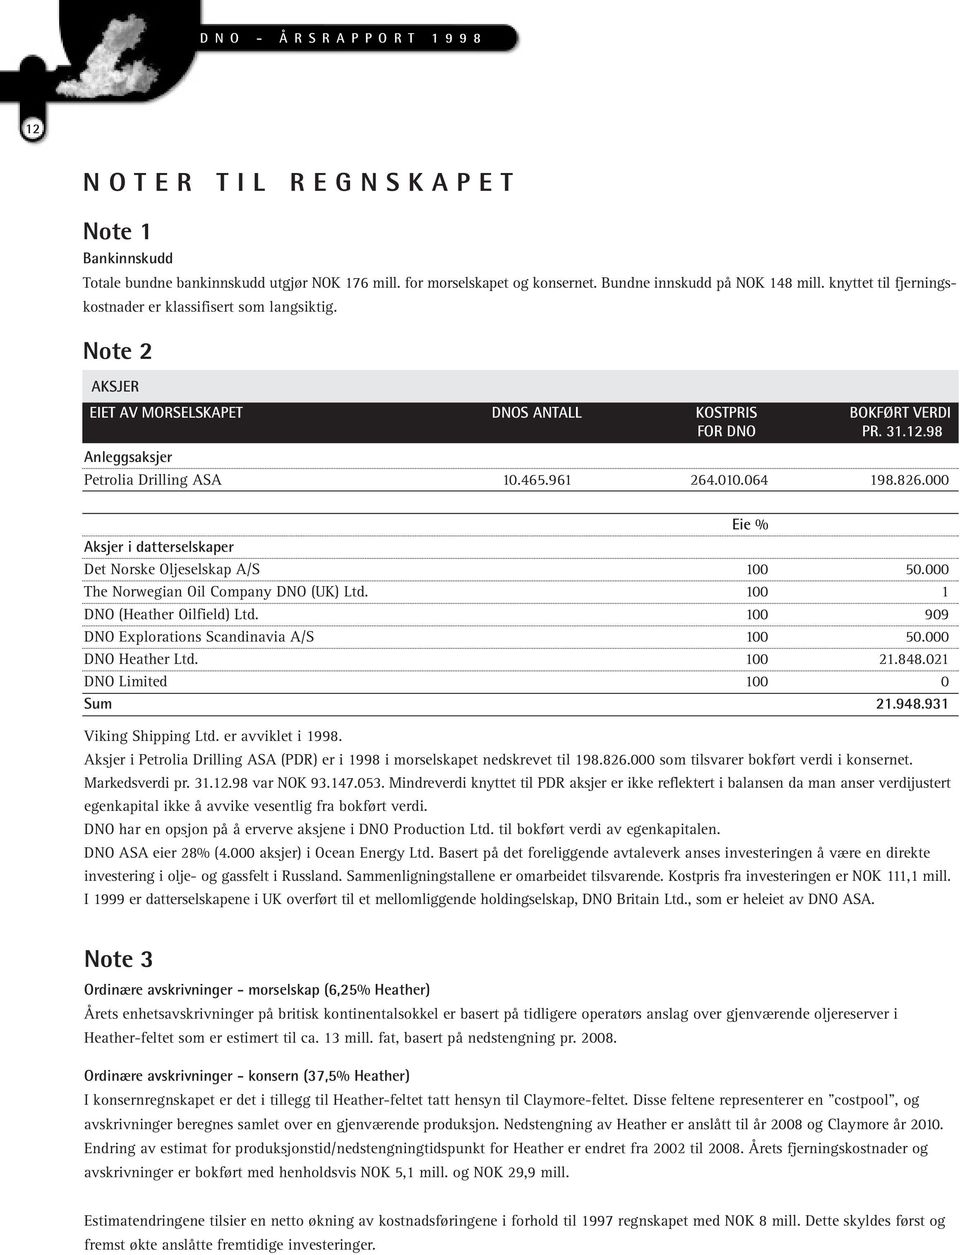 961 264.1.64 198.826. Eie % Aksjer i datterselskaper Det Norske Oljeselskap A/S 1 5. The Norwegian Oil Company DNO (UK) Ltd. 1 1 DNO (Heather Oilfield) Ltd. 1 99 DNO Explorations Scandinavia A/S 1 5.